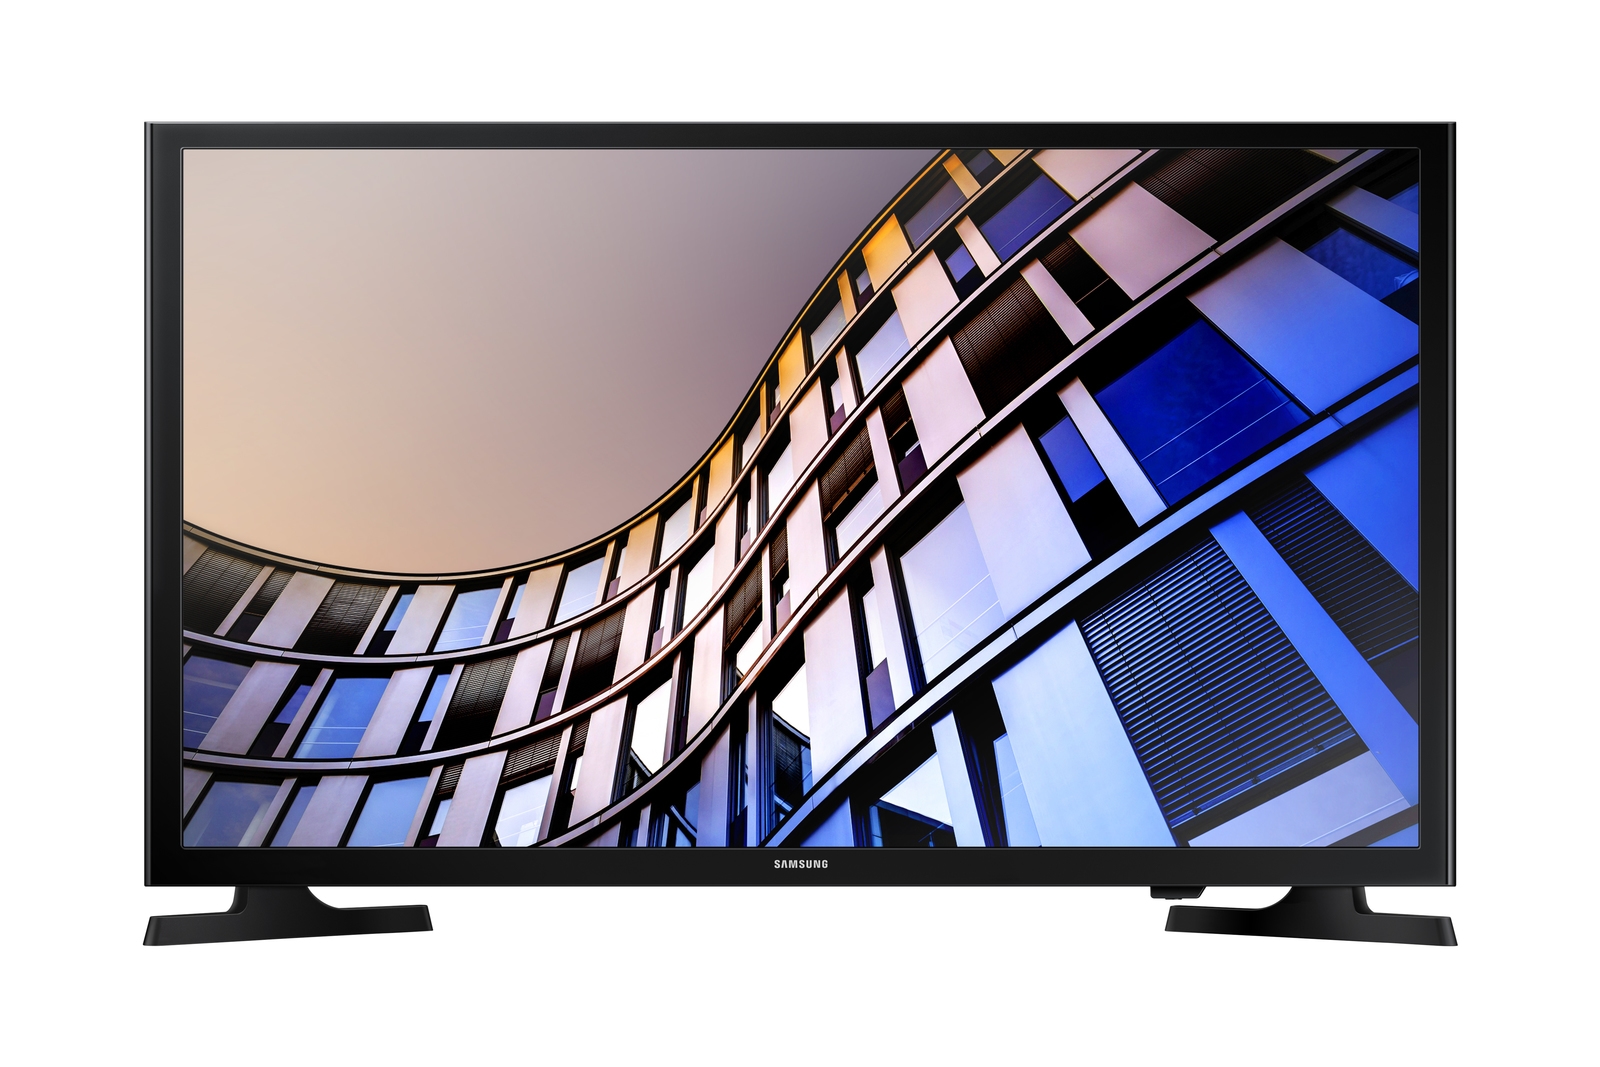 Titan Black; Black 2018 Samsung Electronics UN32J4000EFXZA Flat 32 720p 4 Series TV Renewed 